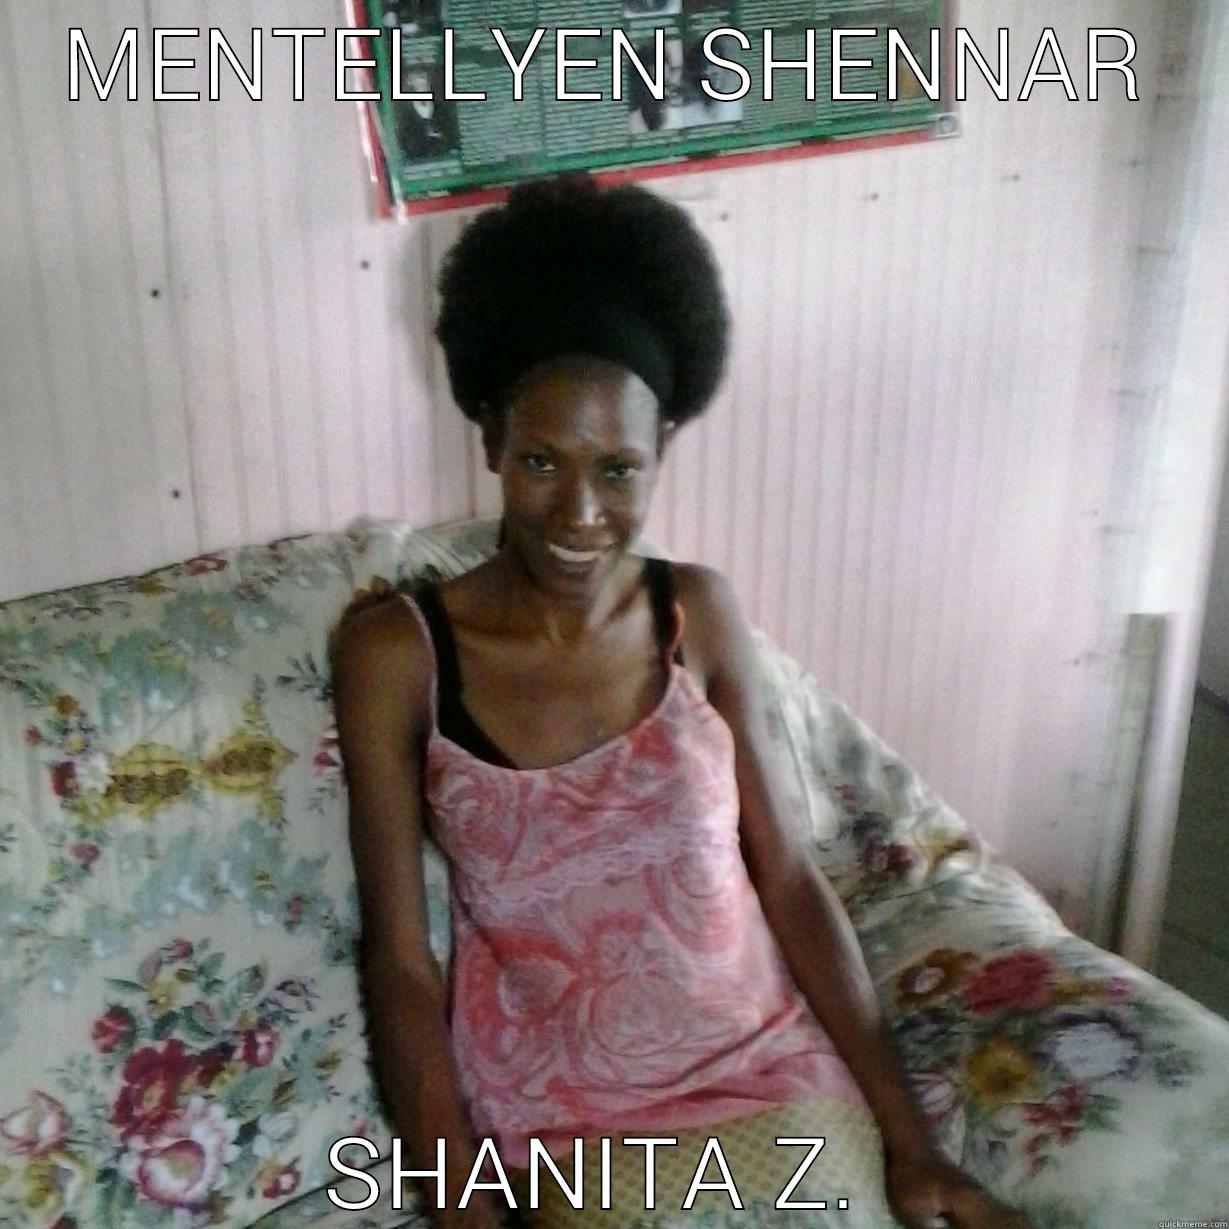 She woke up like this... - MENTELLYEN SHENNAR SHANITA Z.  Misc